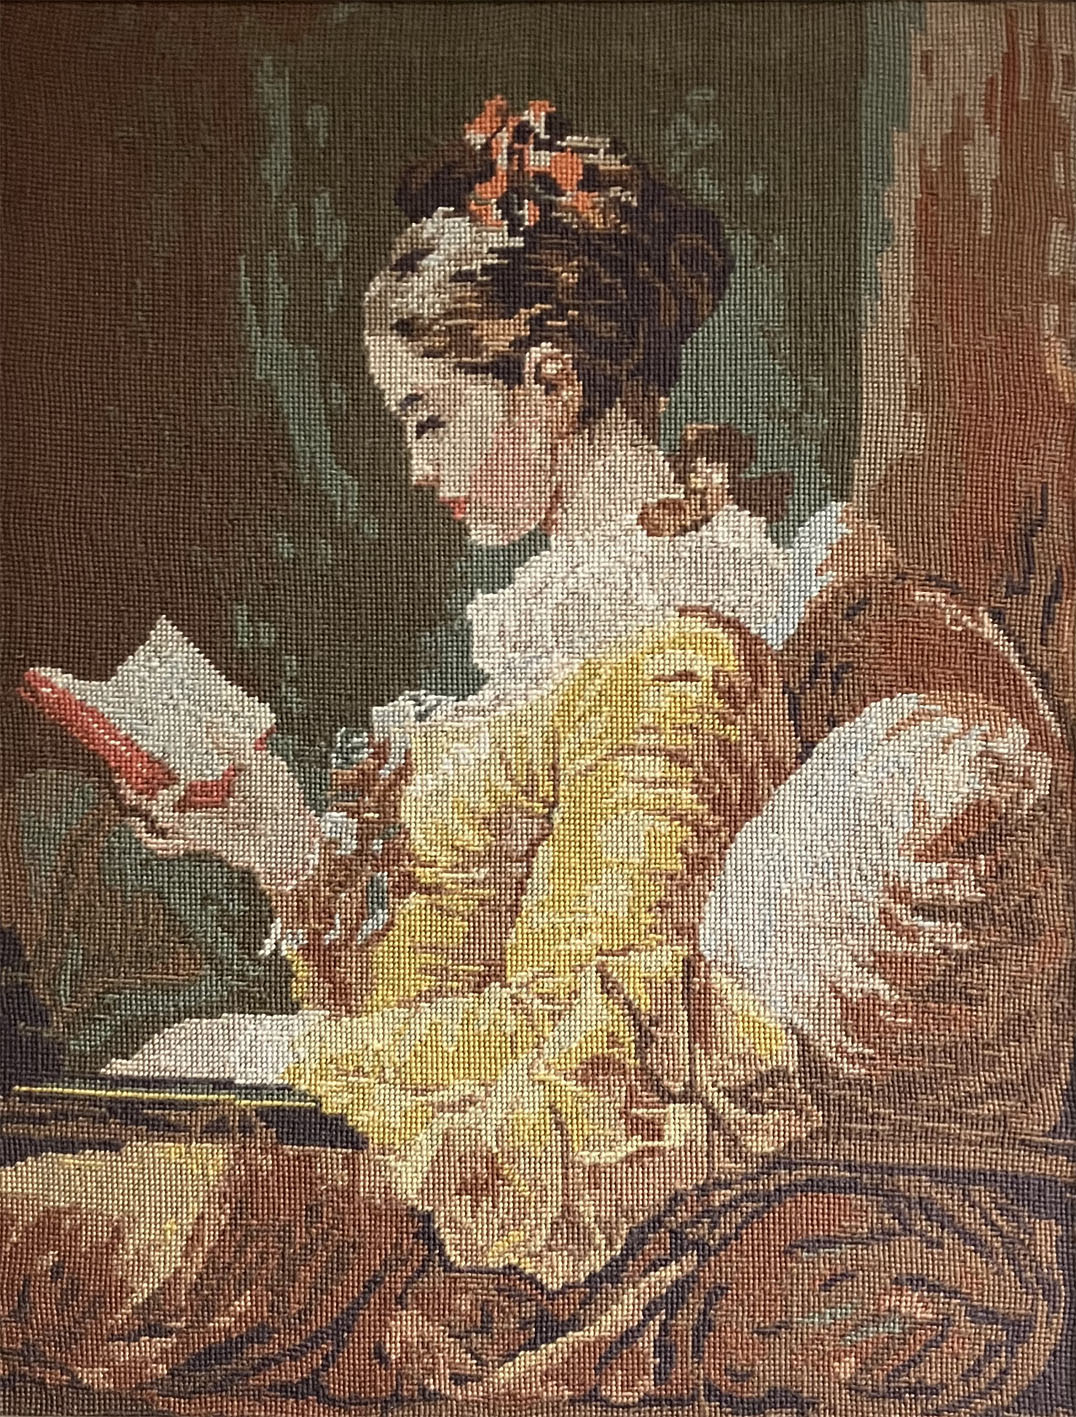 lezende vrouw